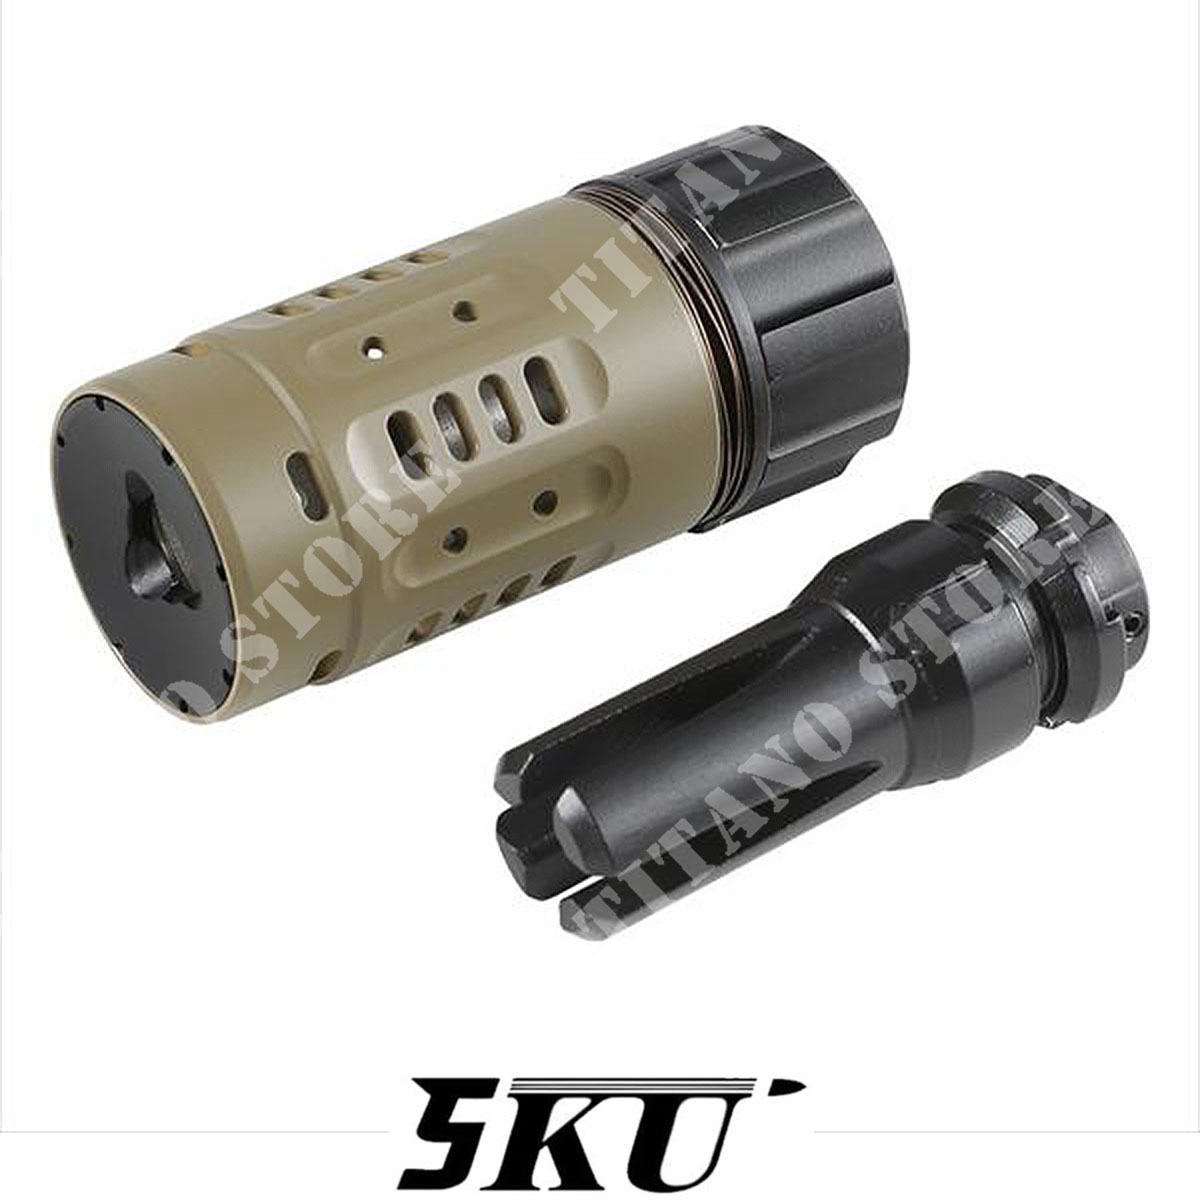 Silenziatore sandman con spegni fiamma 14mm- tan 5ku (5ku-349-t):  Silenziatori / tracer per Softair